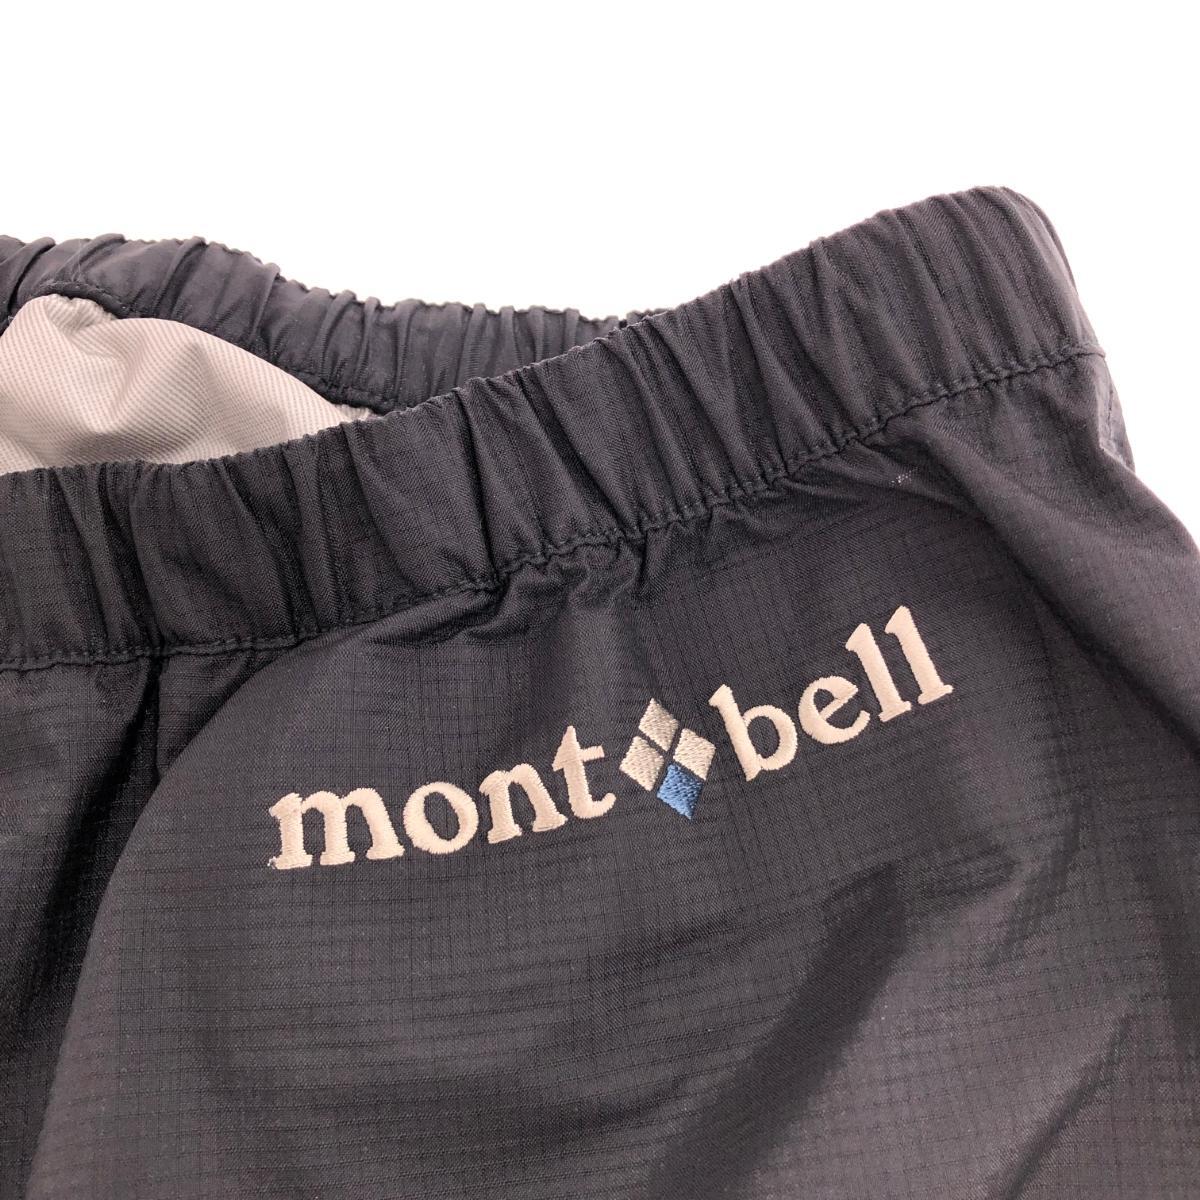 *mont-bell Mont Bell дождь Dan sa- брюки размер L* черный Gore-Tex мужской низ непромокаемая одежда 